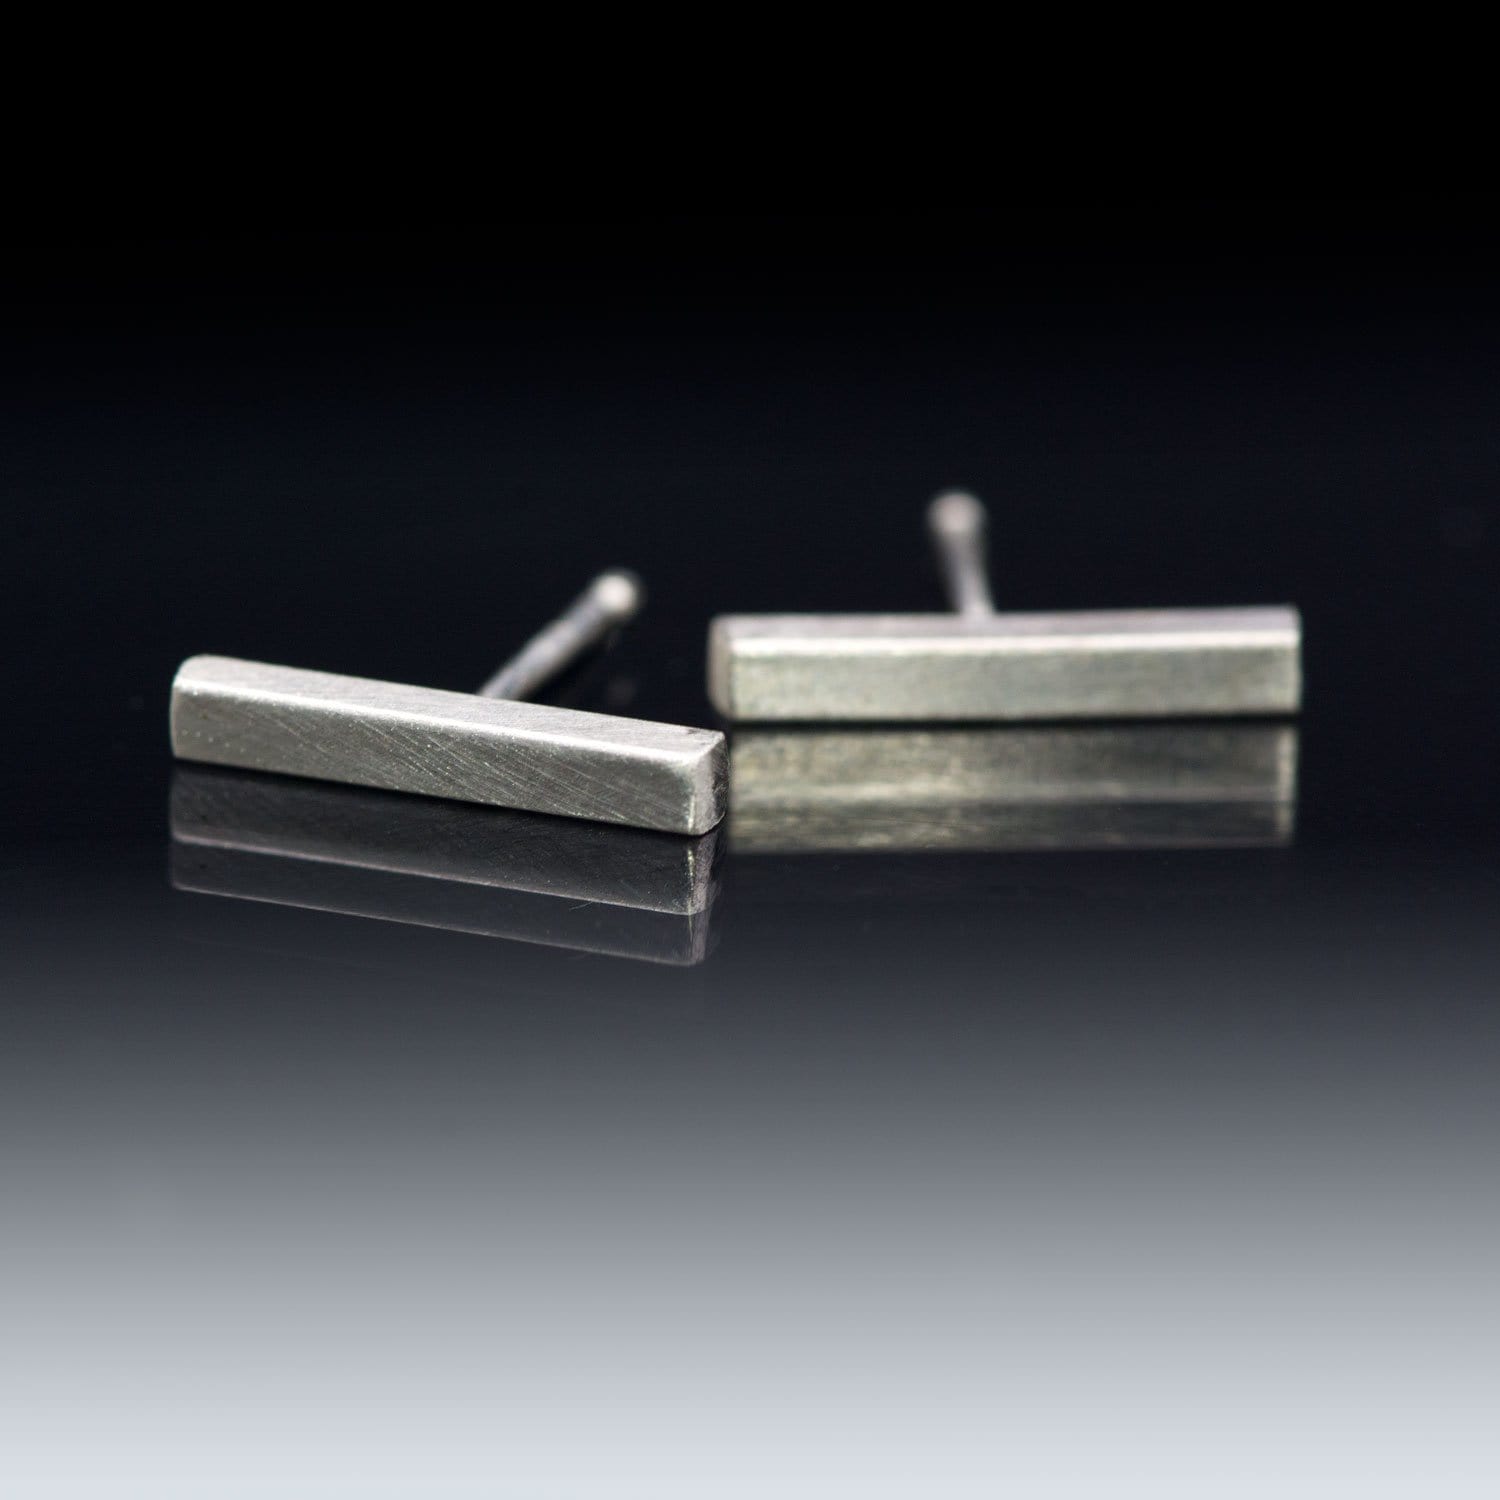 Simple Sterling Silver Bar Studs Earrings, Ready to Ship Sterling Silver Earrings by Nodeform